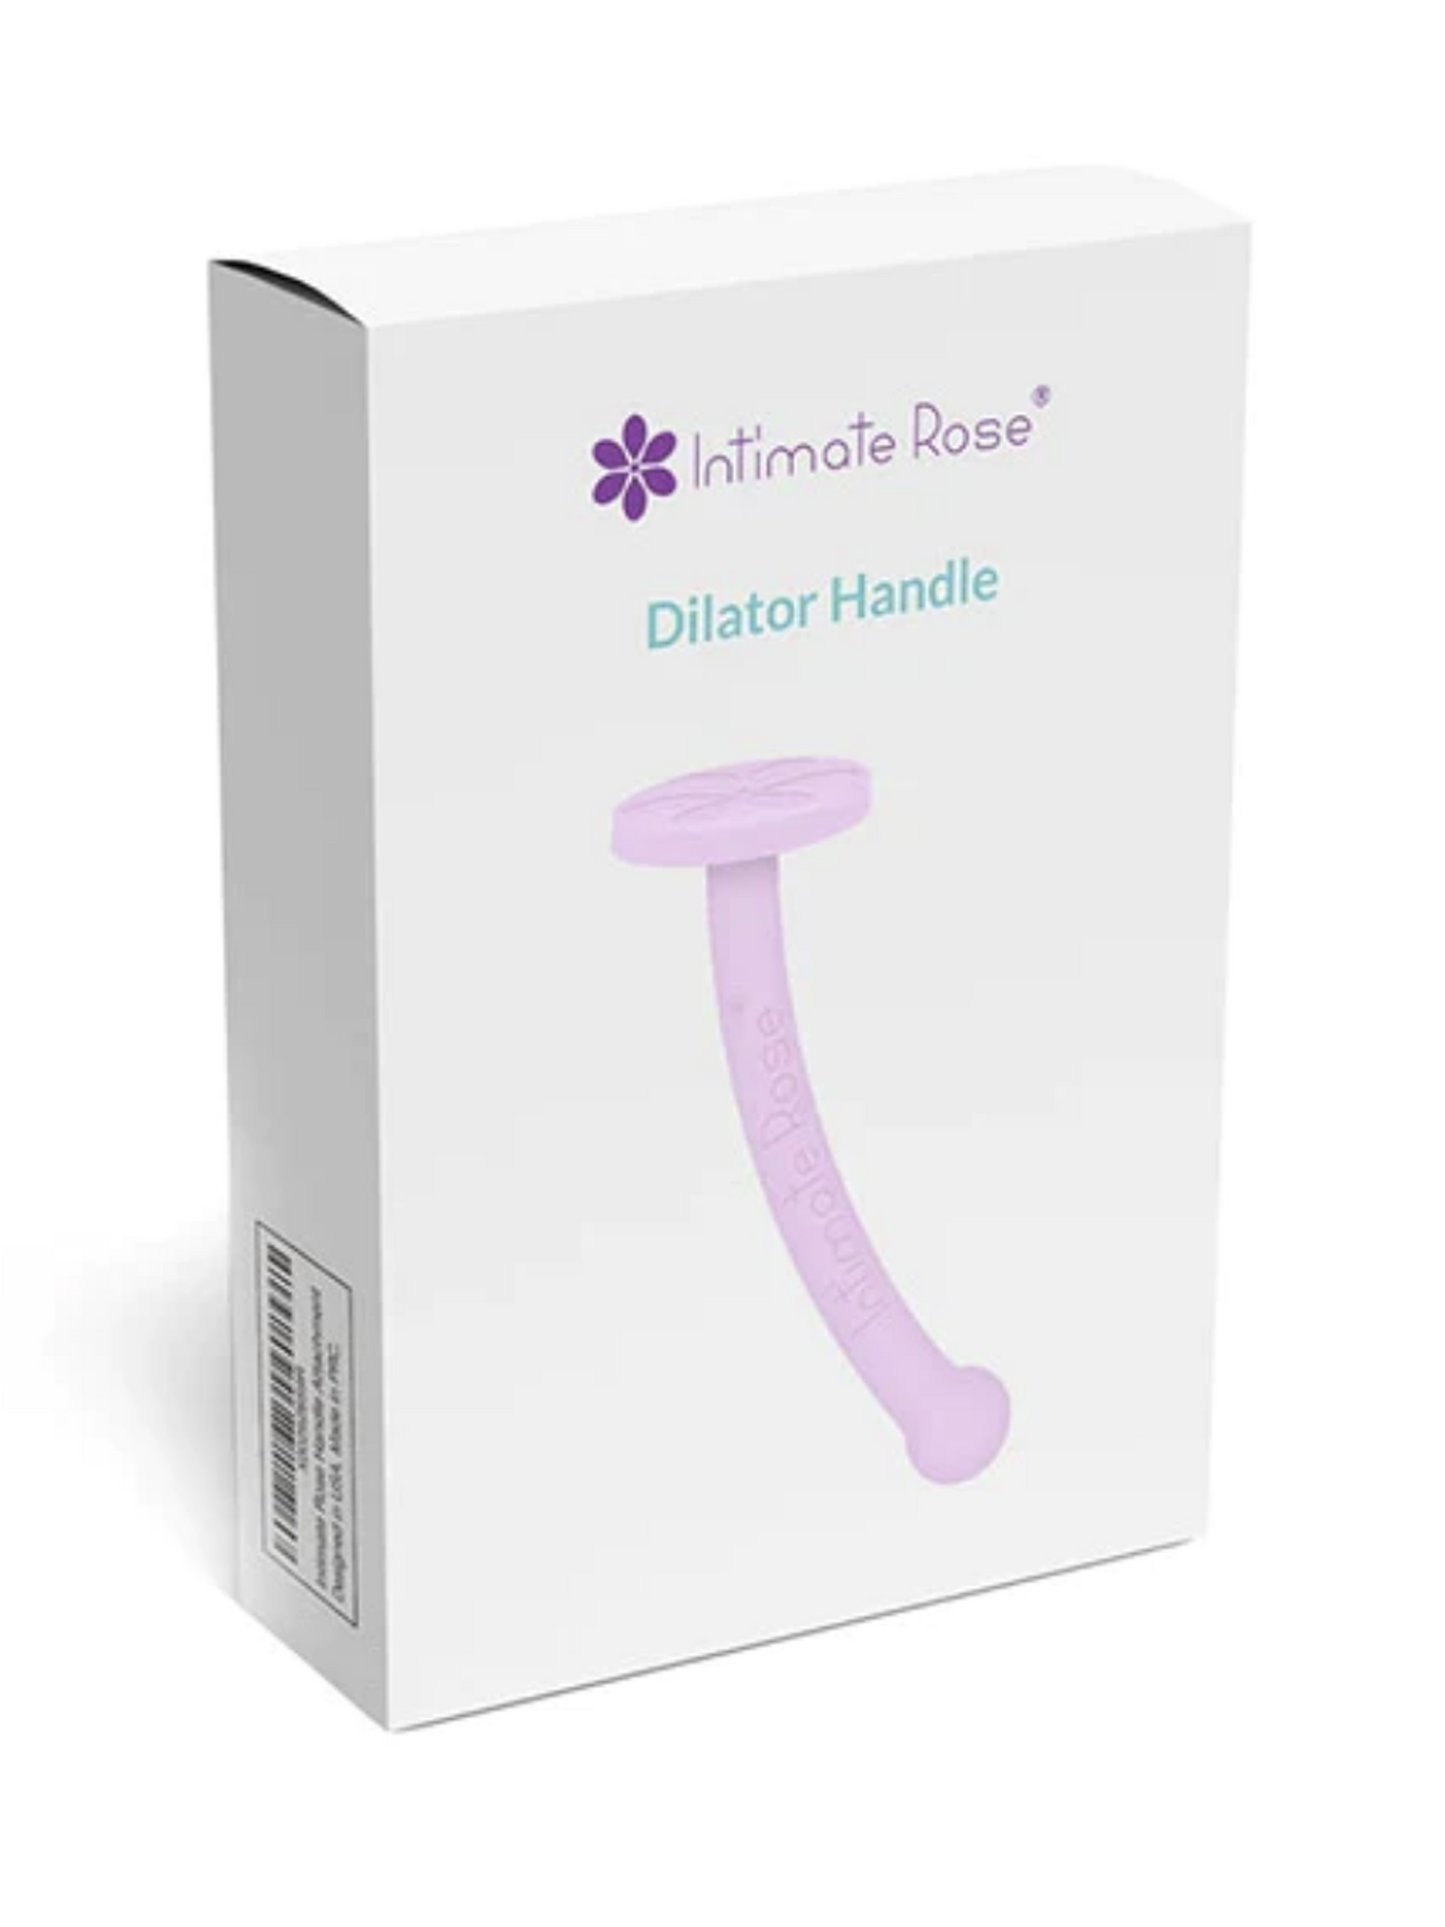 IntimateRose Dilator Handle in Box